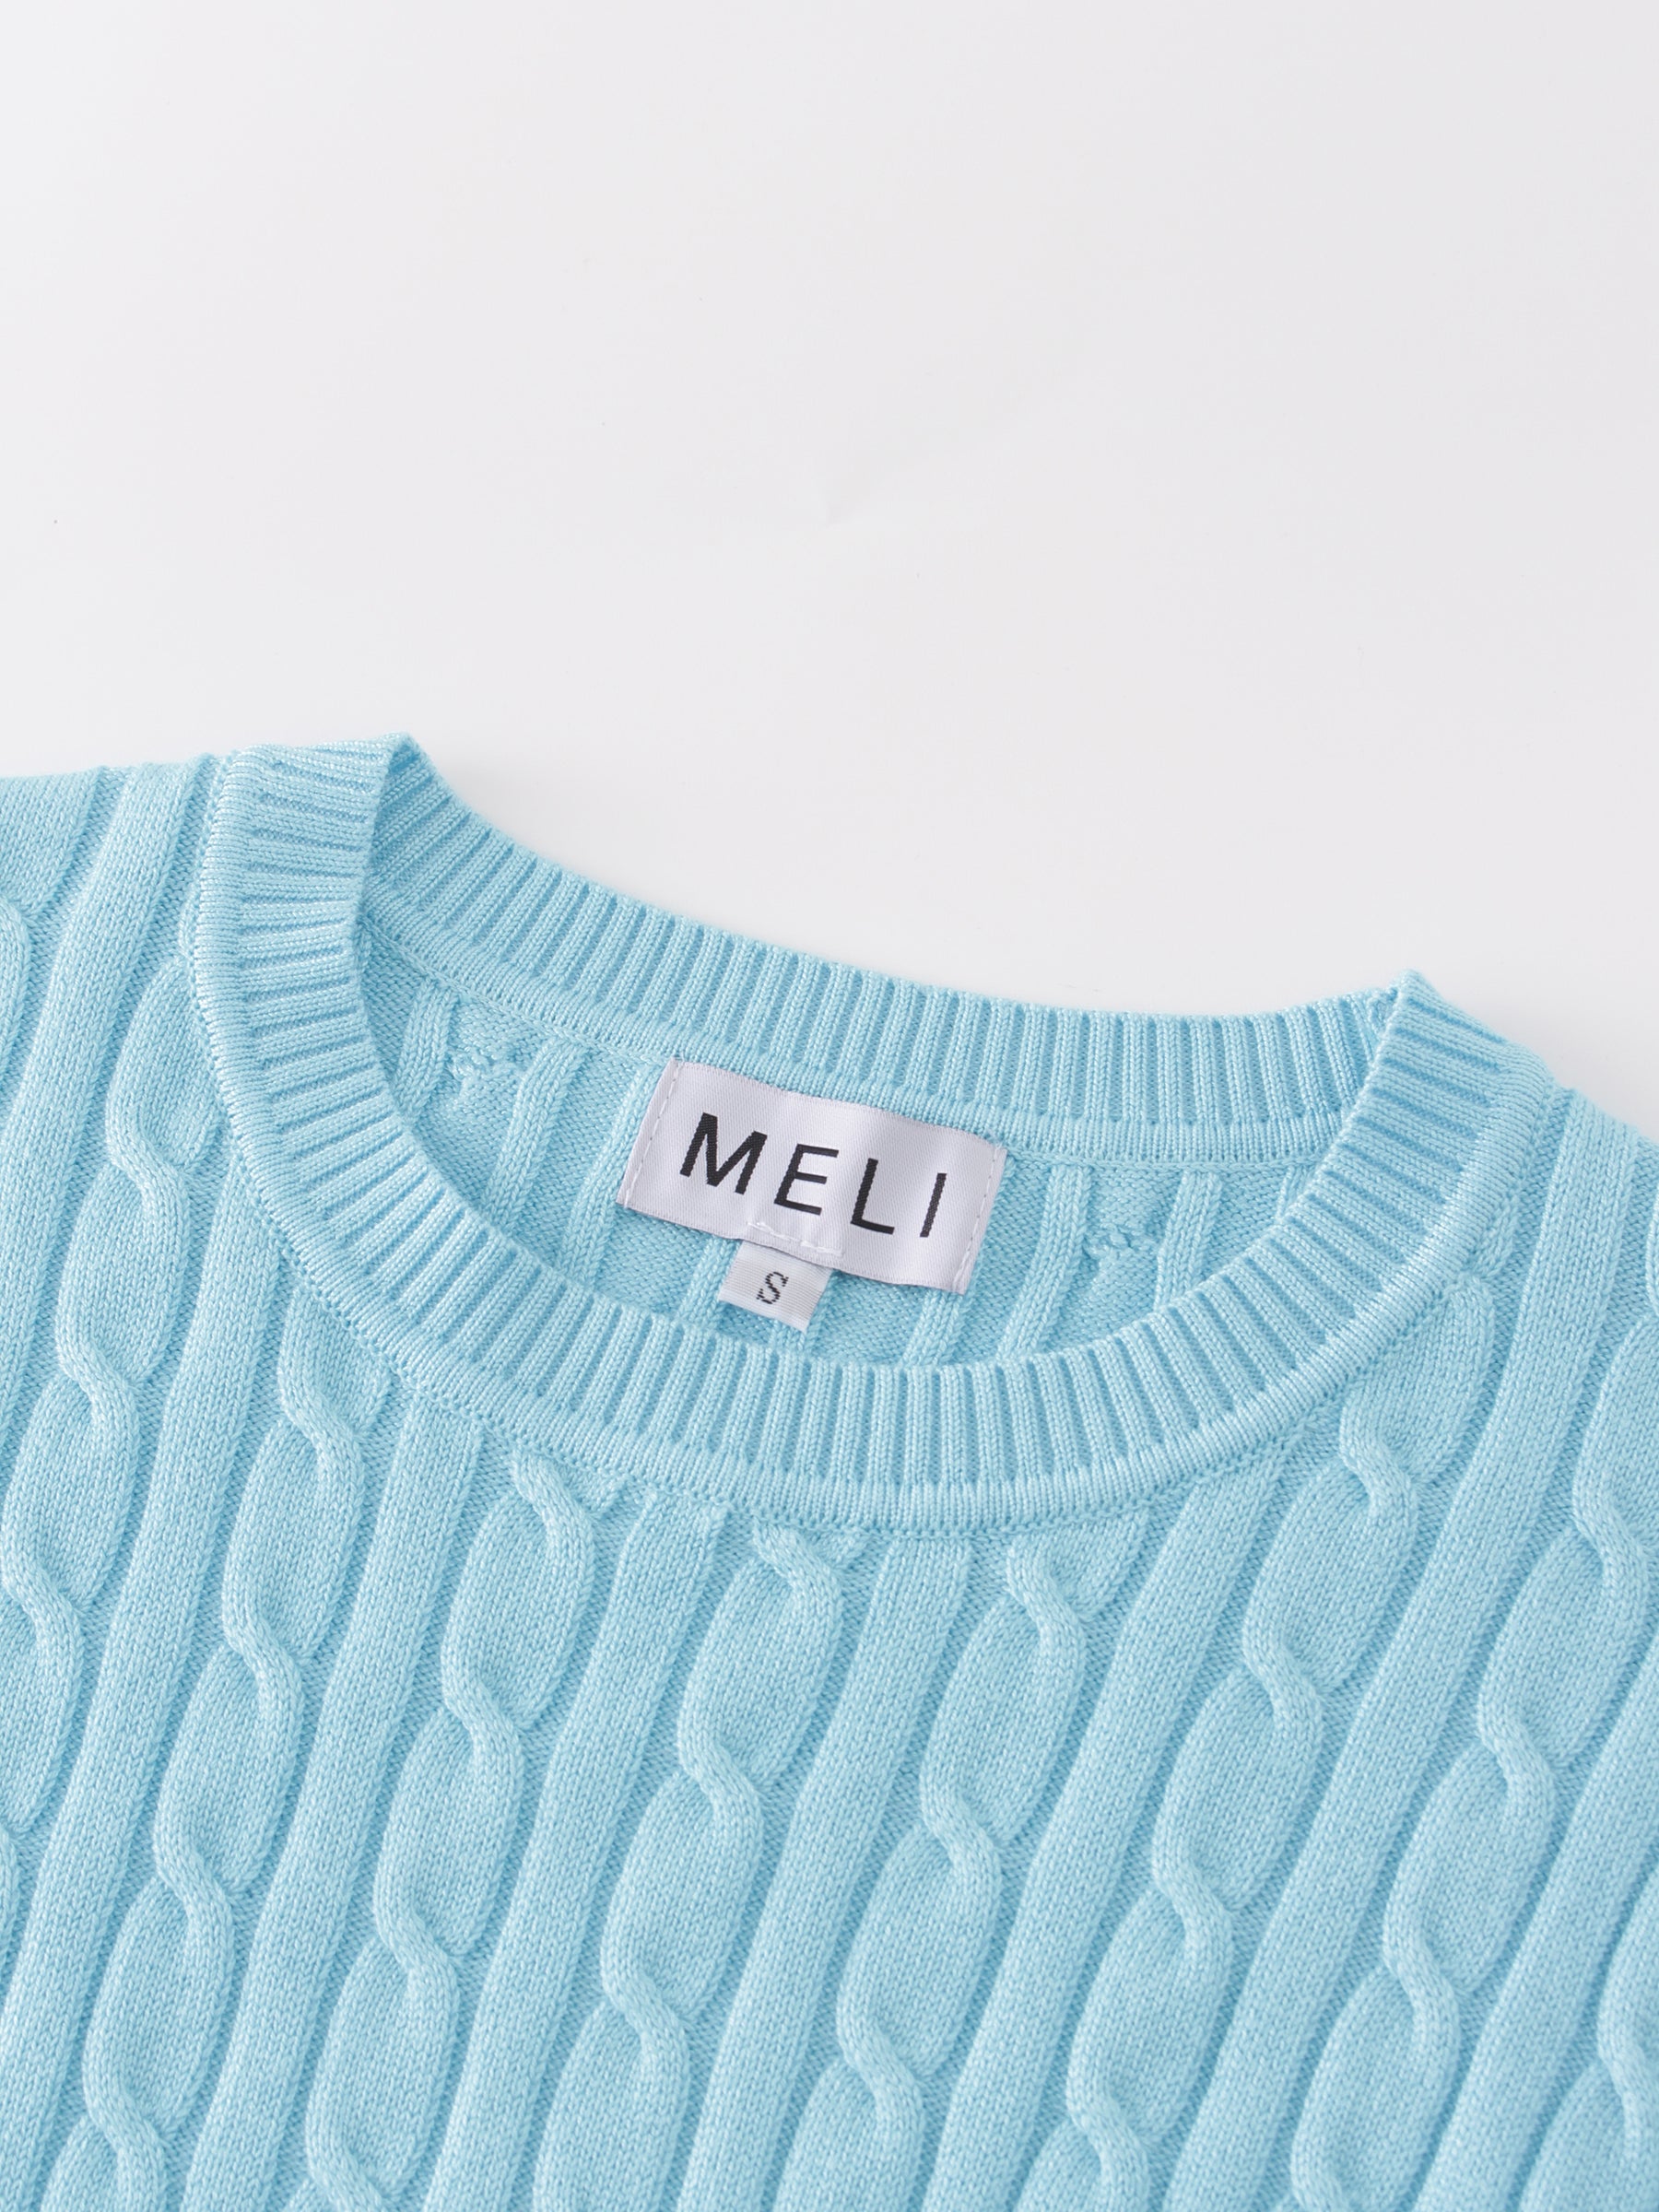 Knit Cable Sweater-Aqua Blue